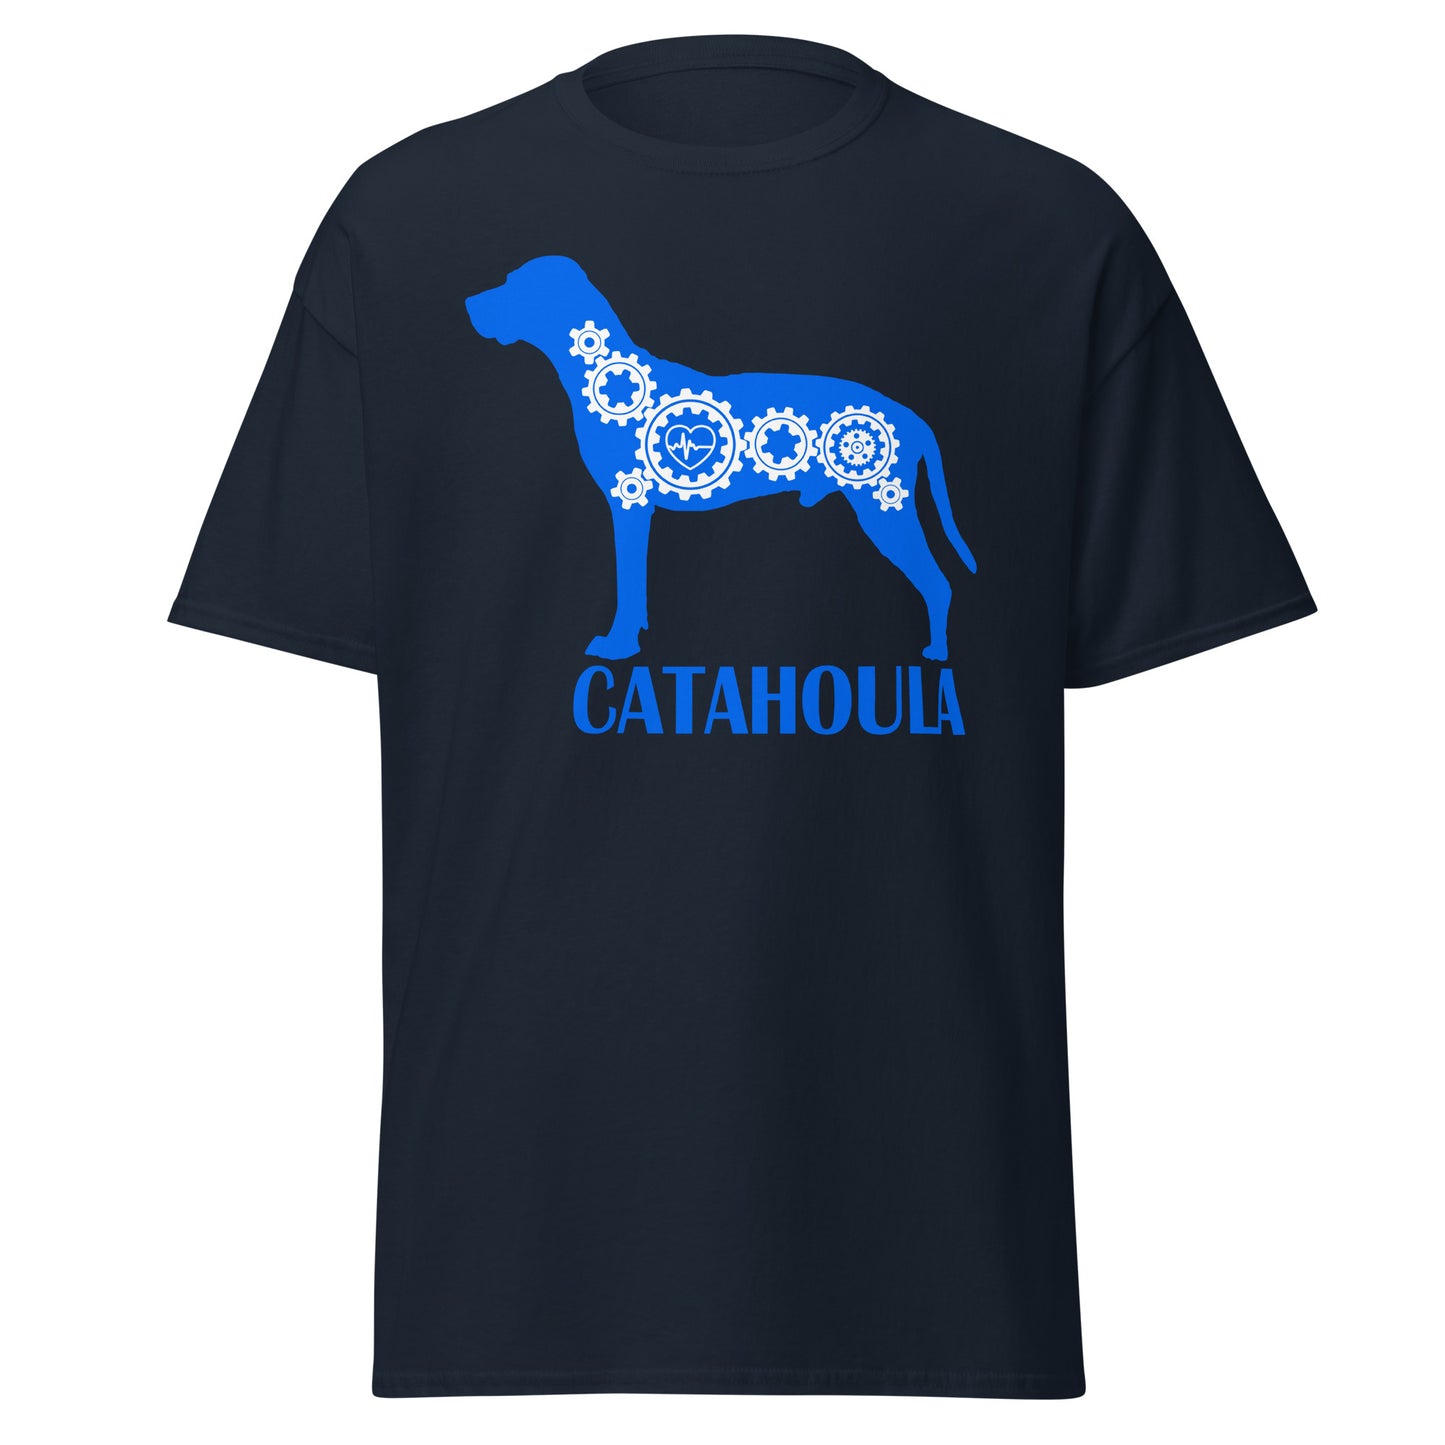 Catahoula Bionic men’s navy t-shirt by Dog Artistry.